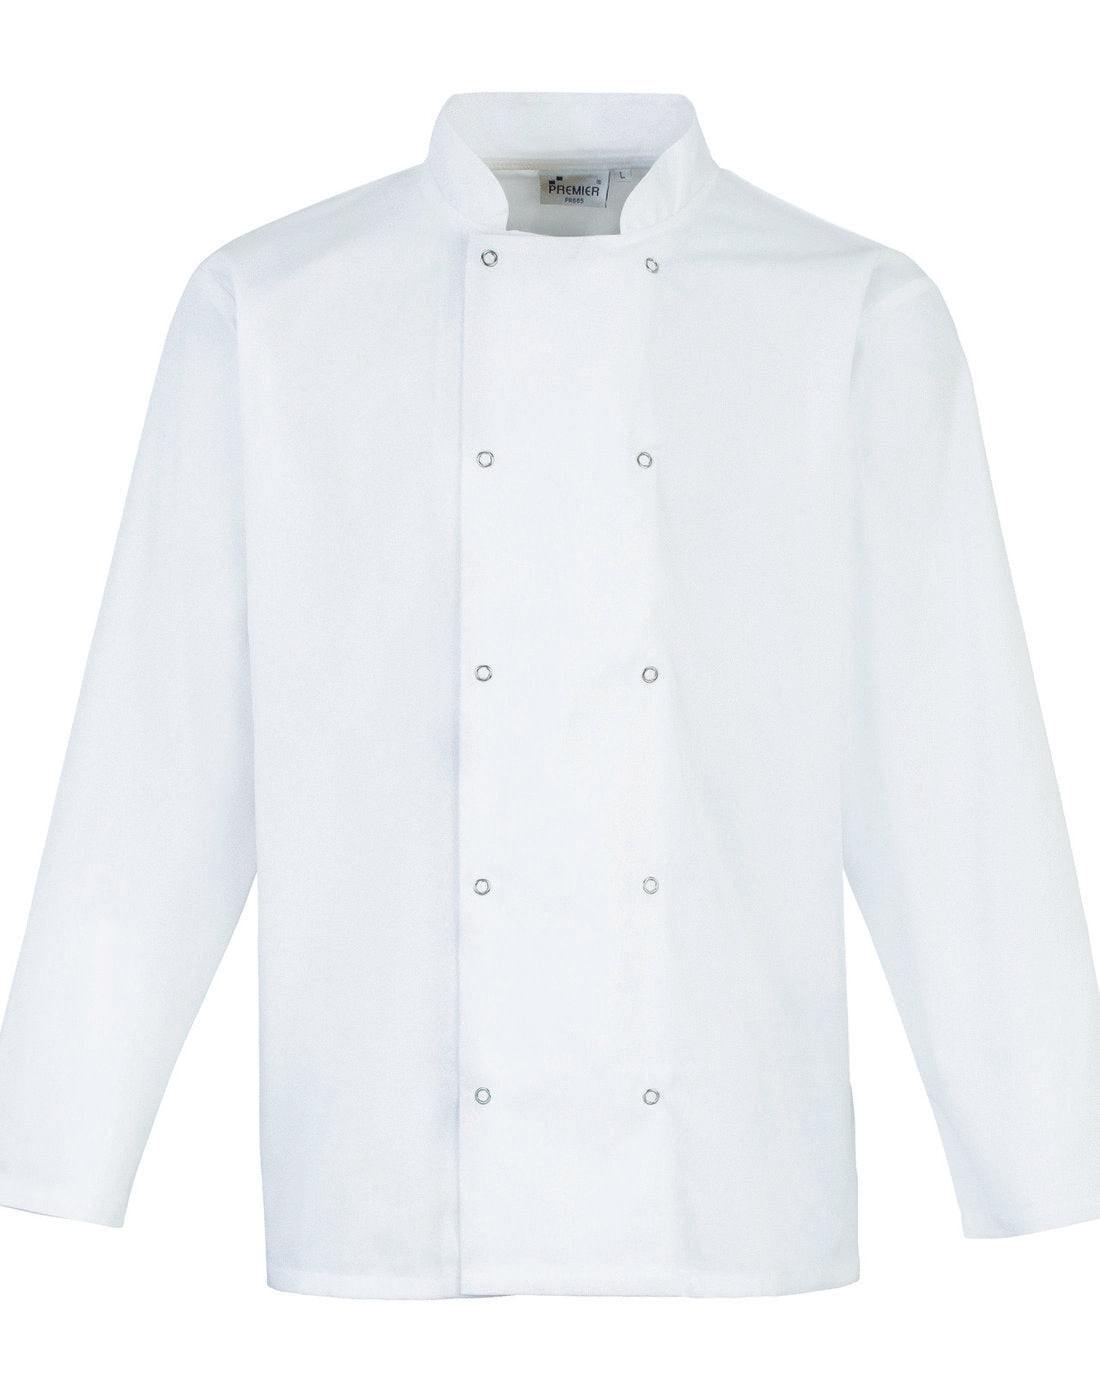 Premier Chef's Long Sleeve Stud Jacket